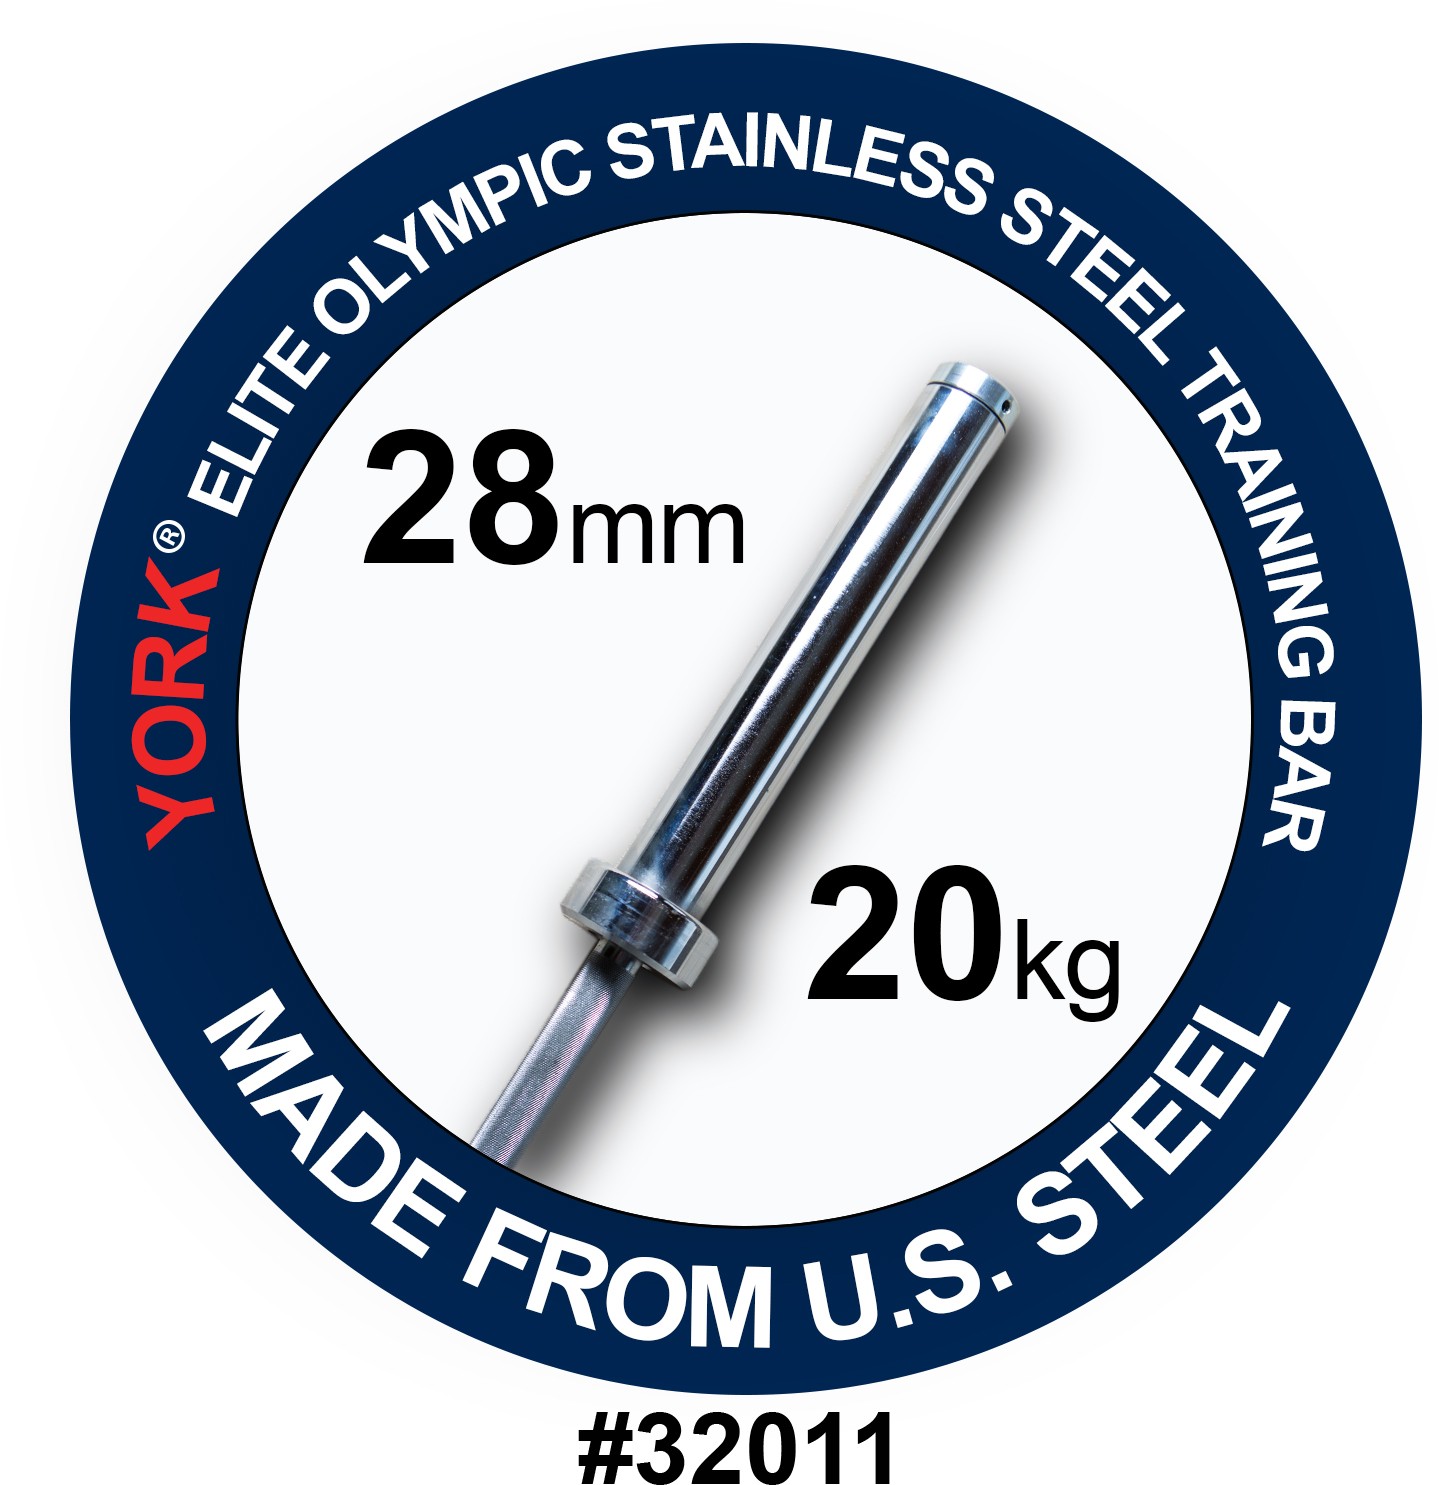 York Elite Olympic Stainless Steel Bar | 28mm (New)